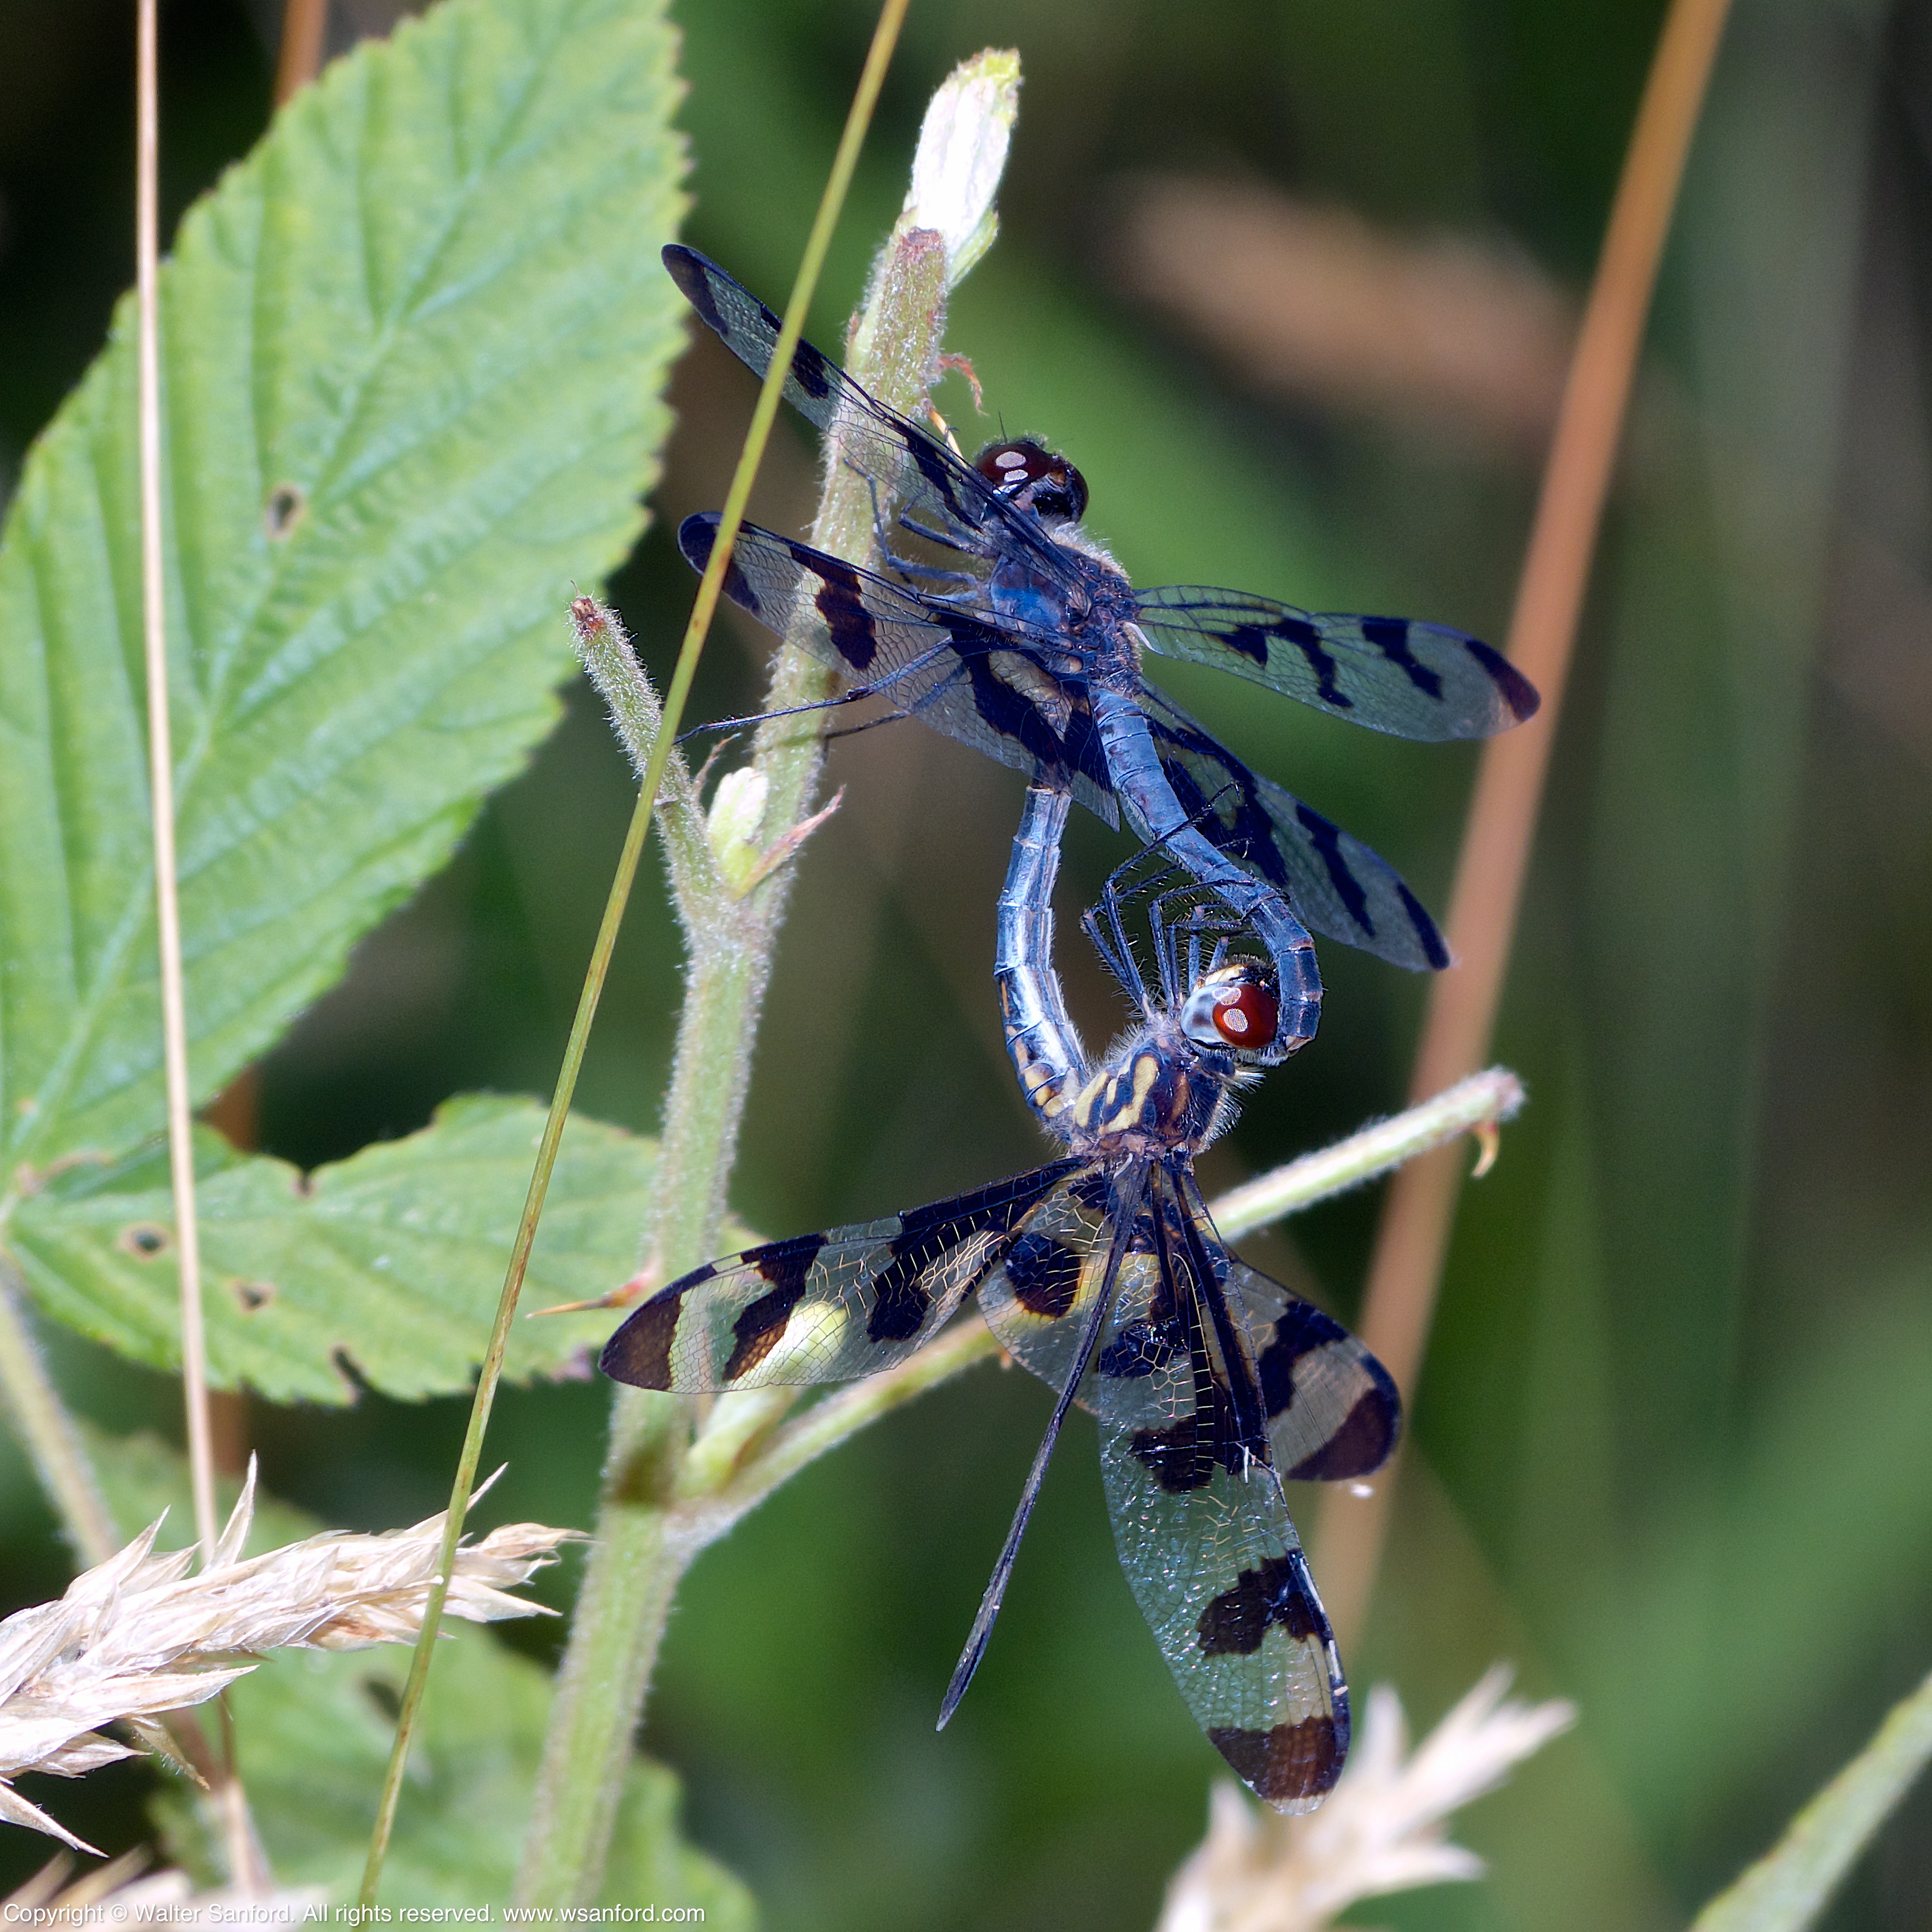 Banded Pennant dragonflies (mating pair) | walter sanford's photoblog